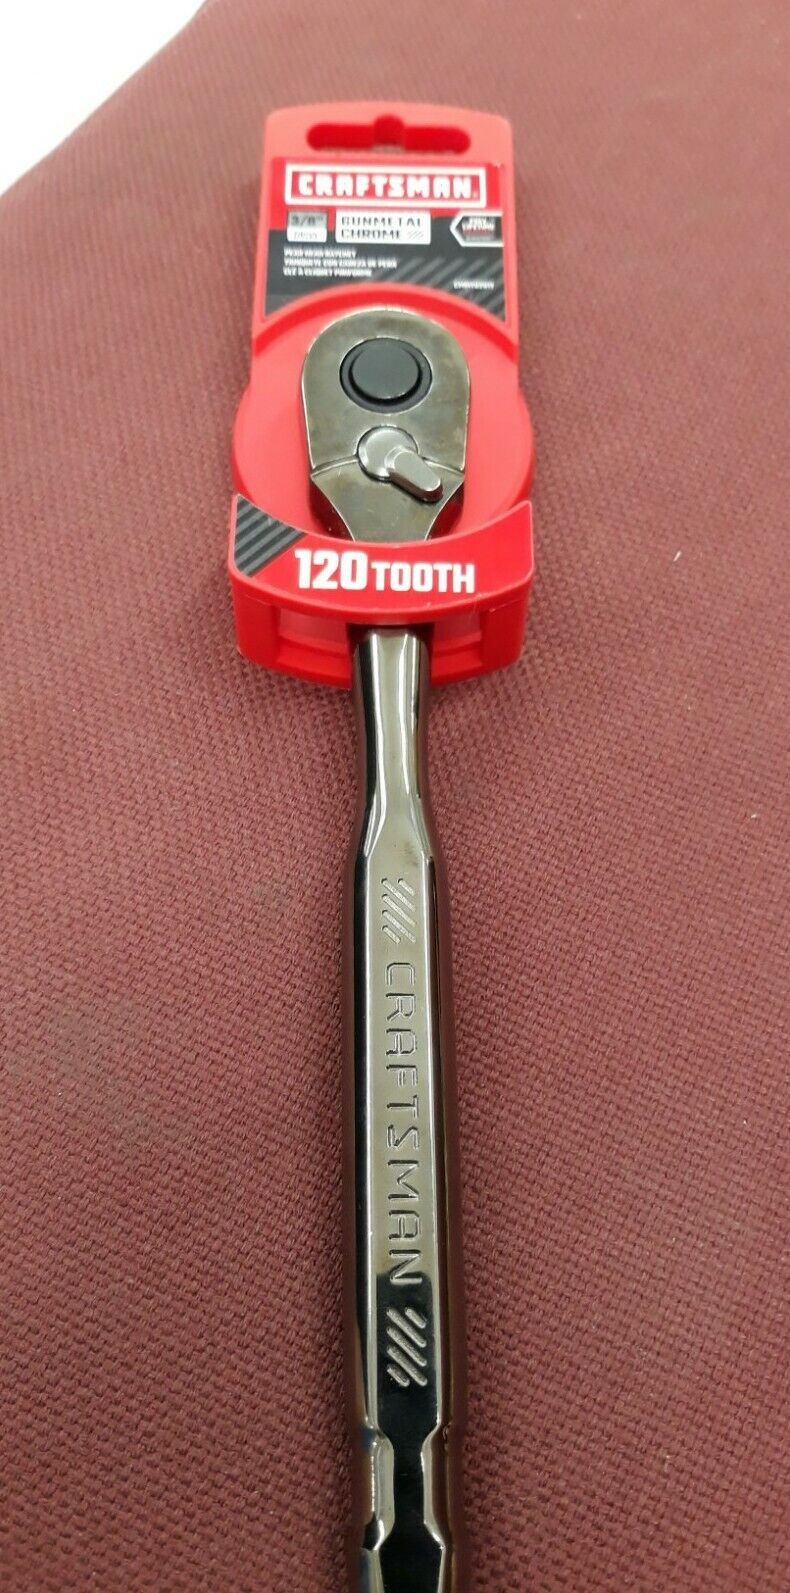 Craftsman 3/8" Drive Gunmetal Chrome 120 Tooth Pear Head Ratchet 82011 GM A62 